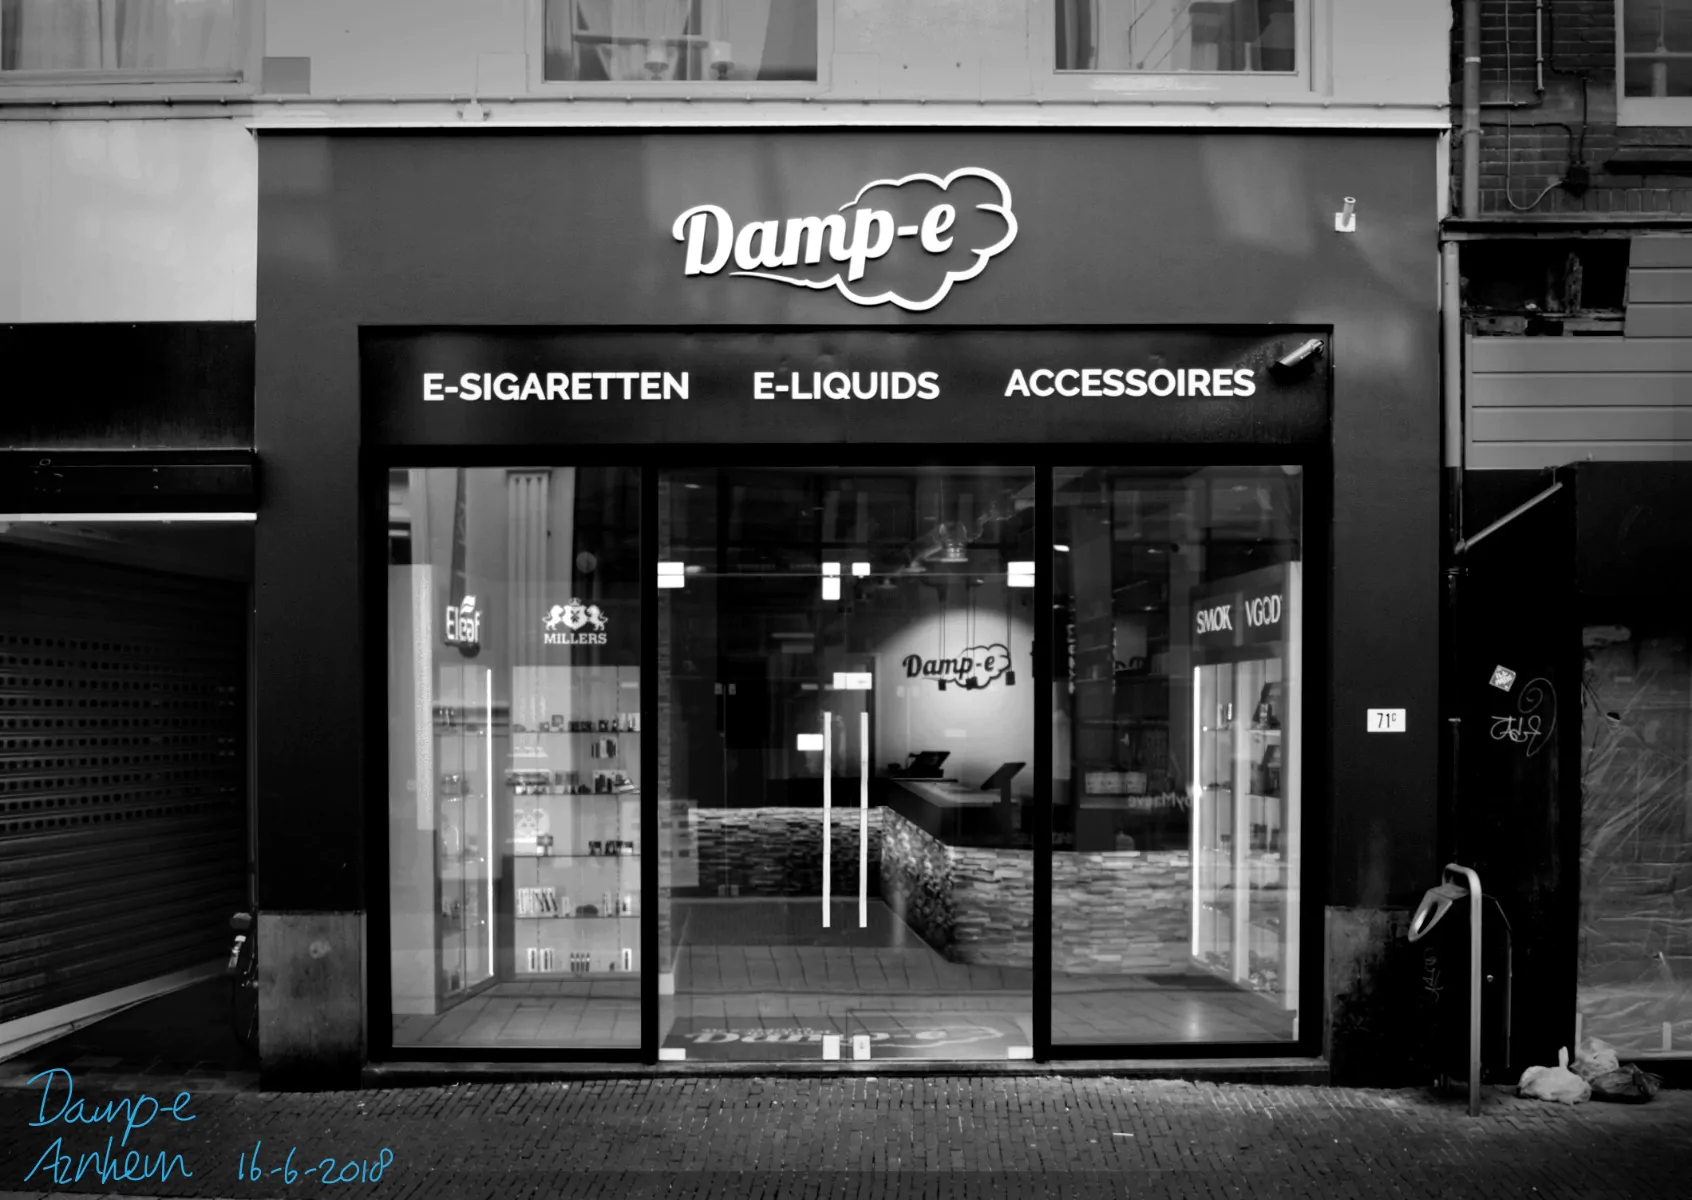 Damp-e winkel in Anrhem